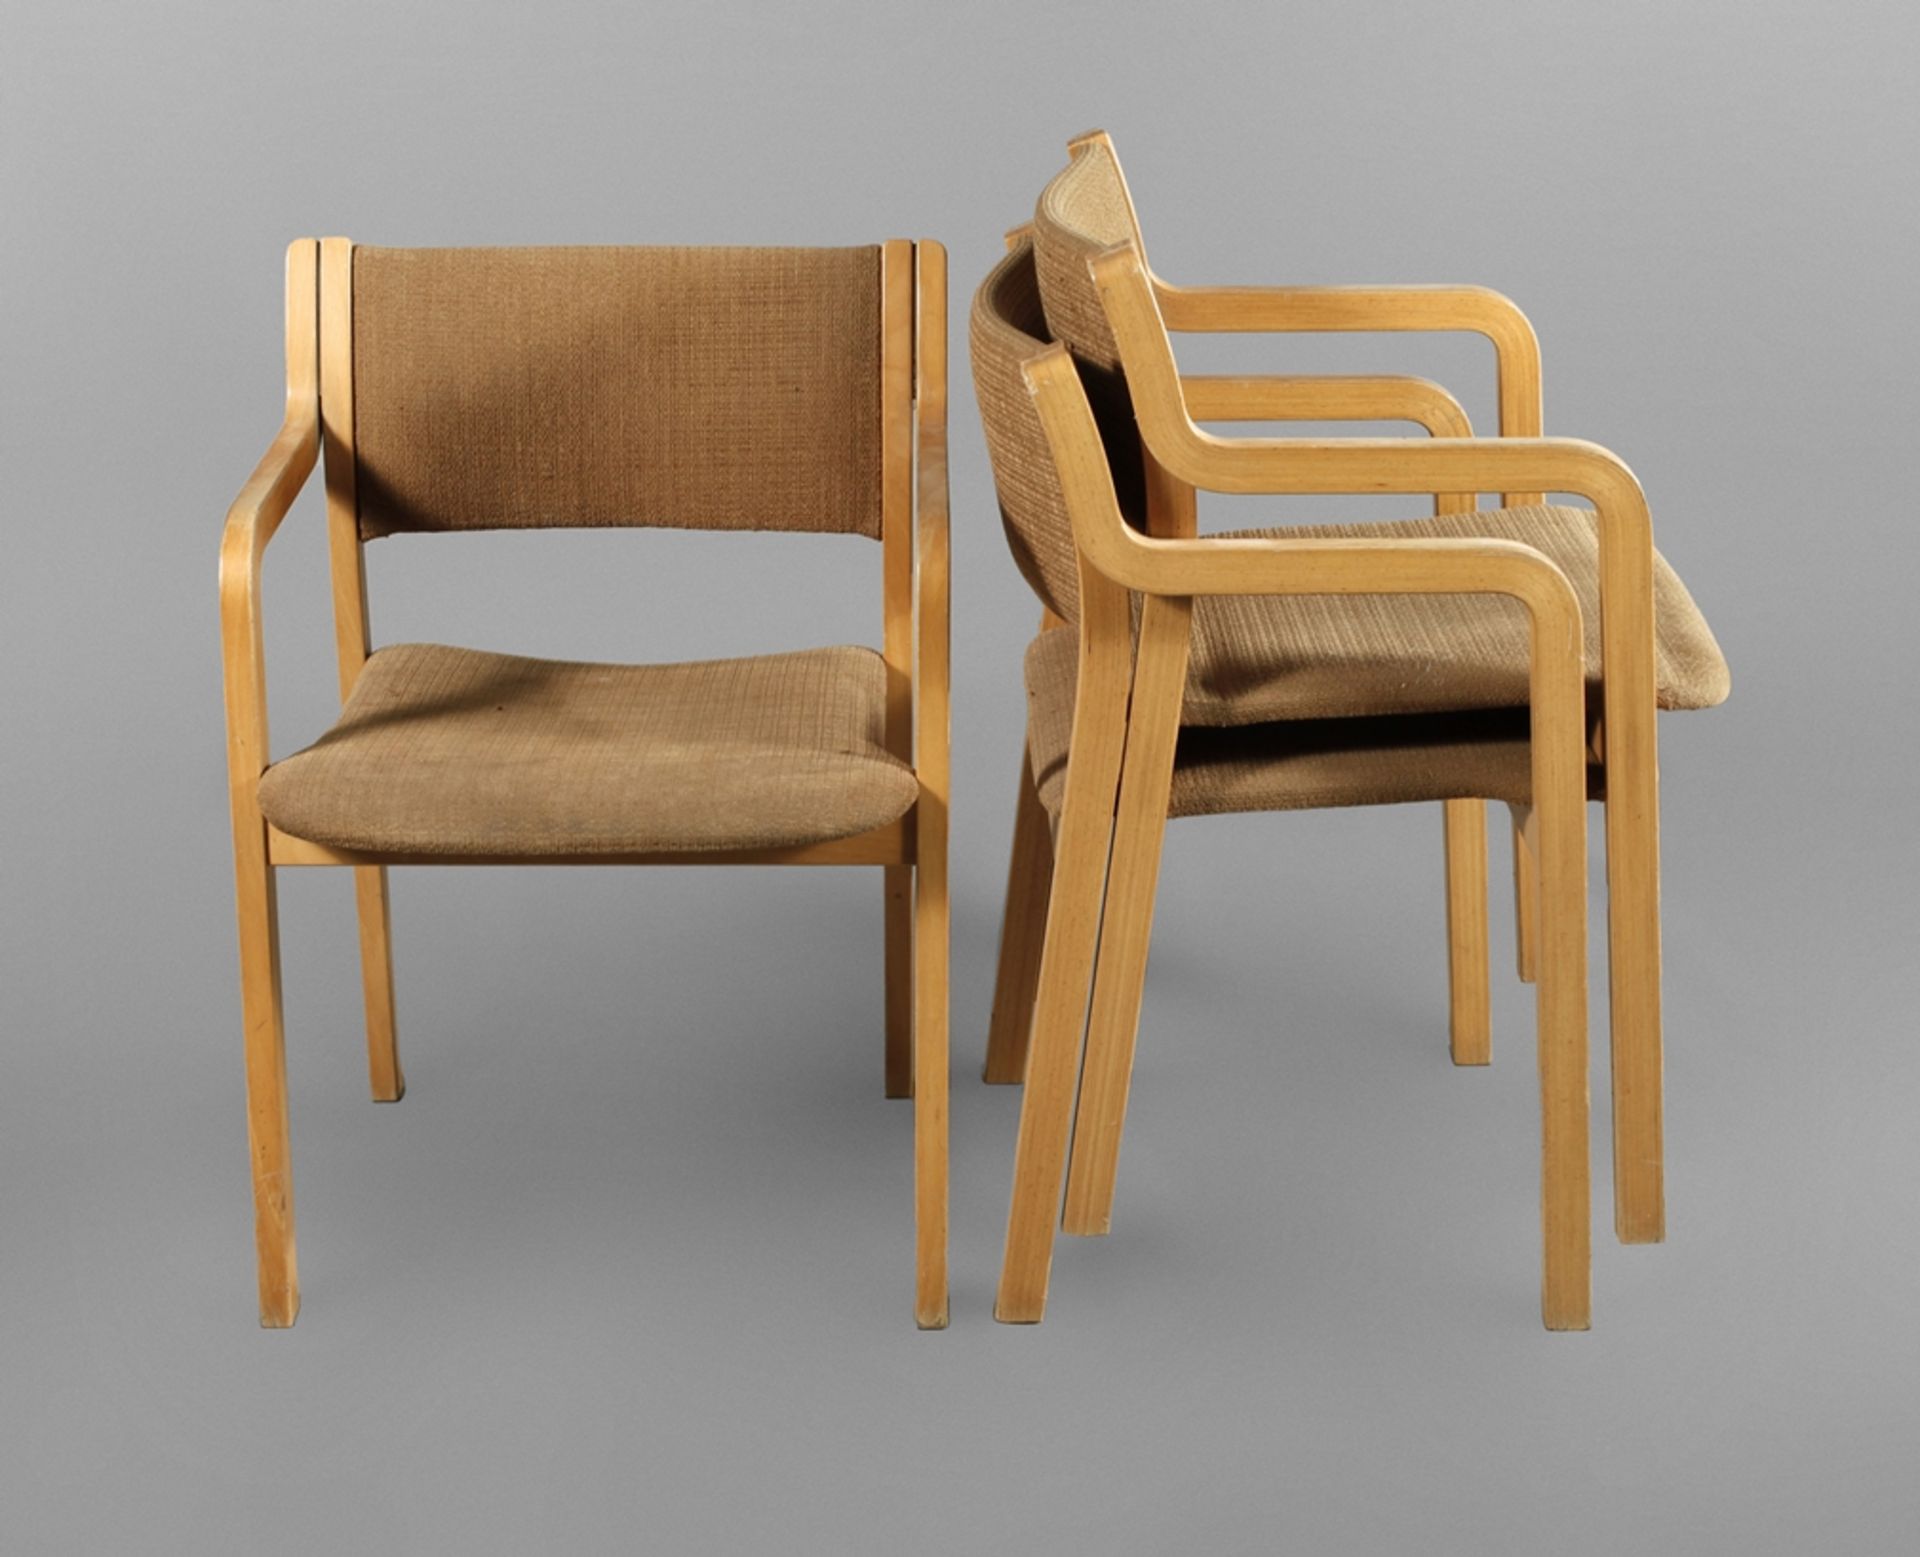 Three chairs Denmark